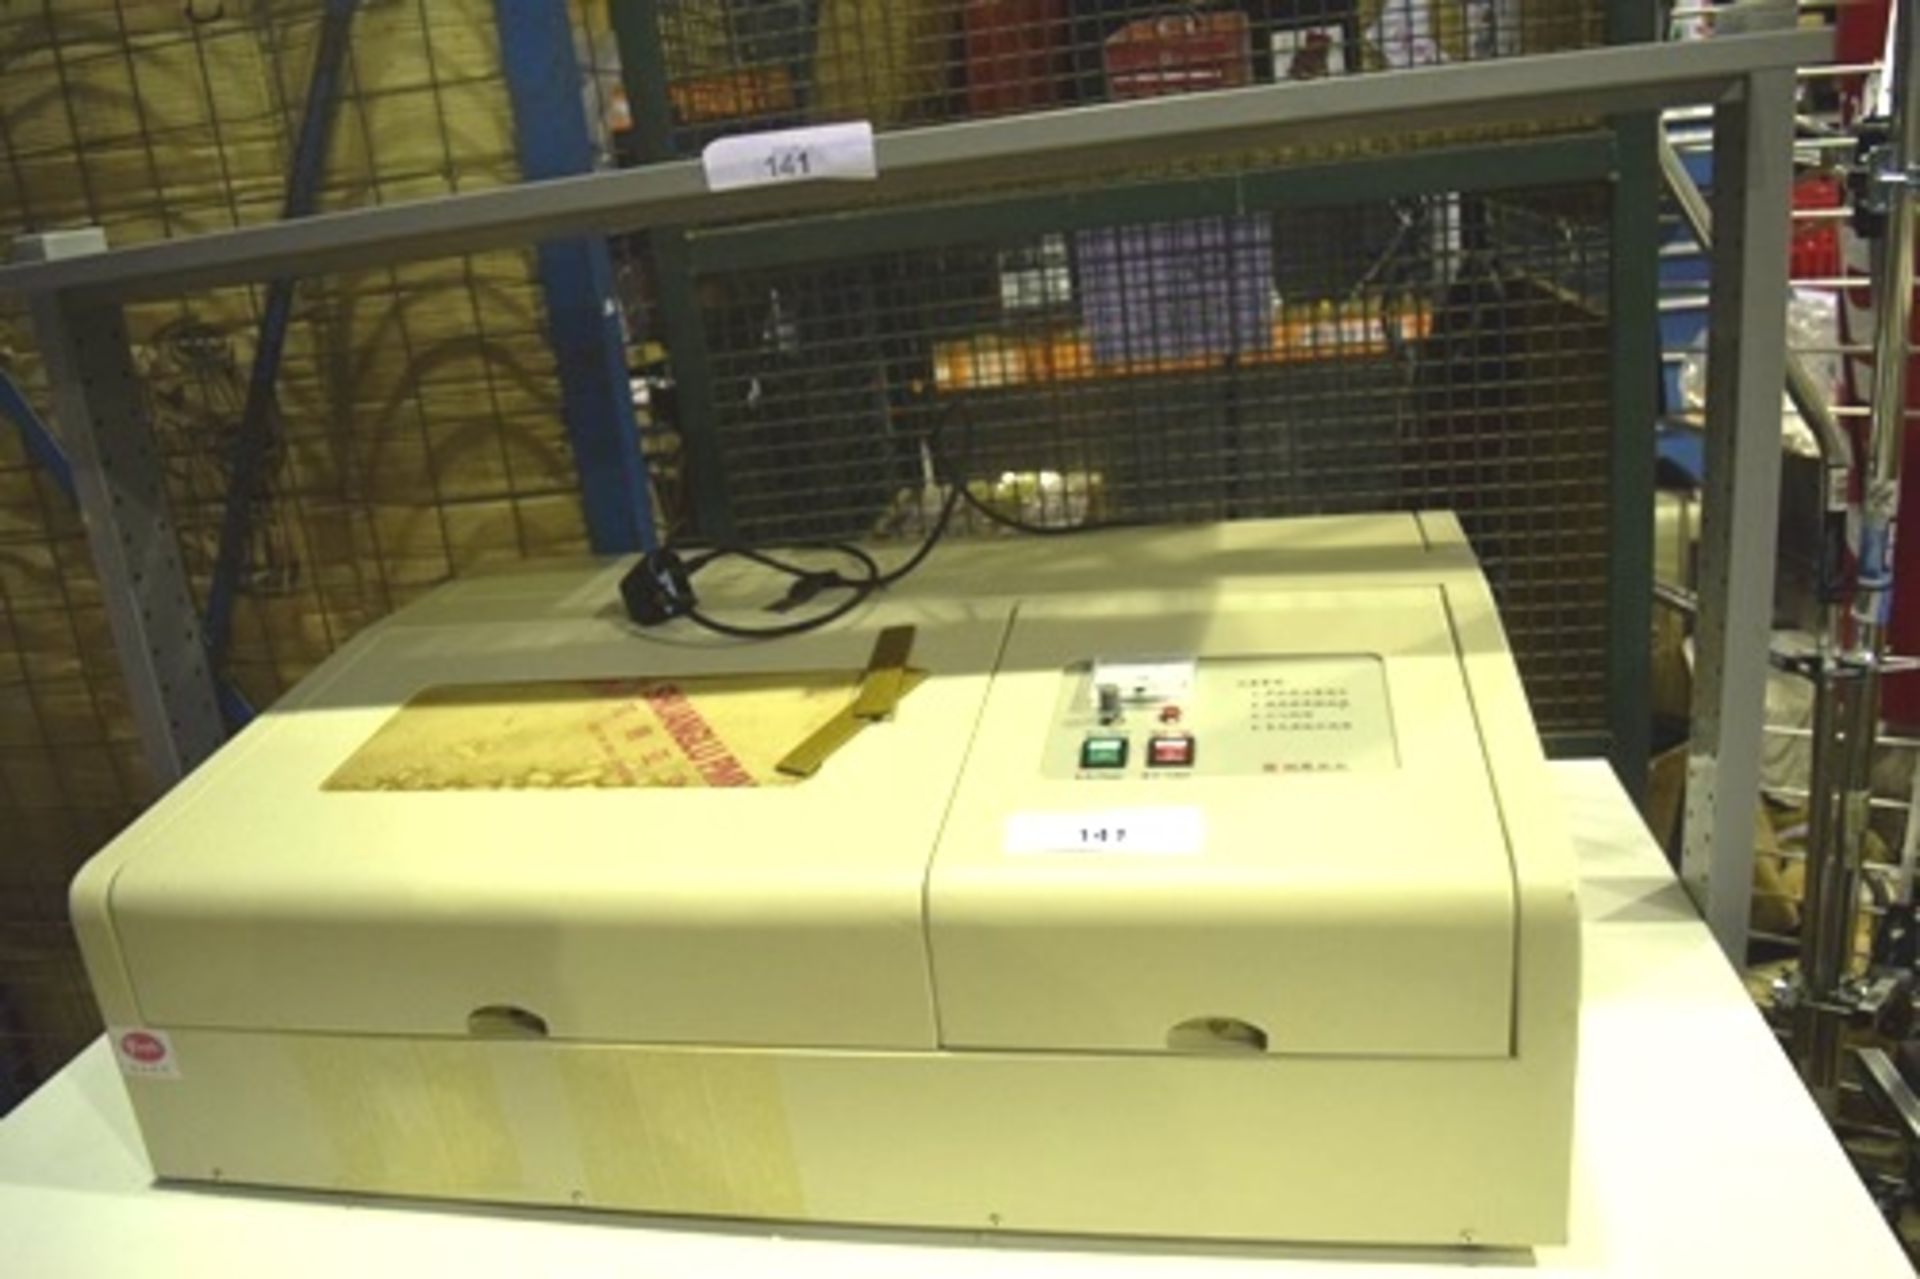 Yinghe laser engraving machine, 240Vm 2 tier workstation included - Second-hand (ES13)